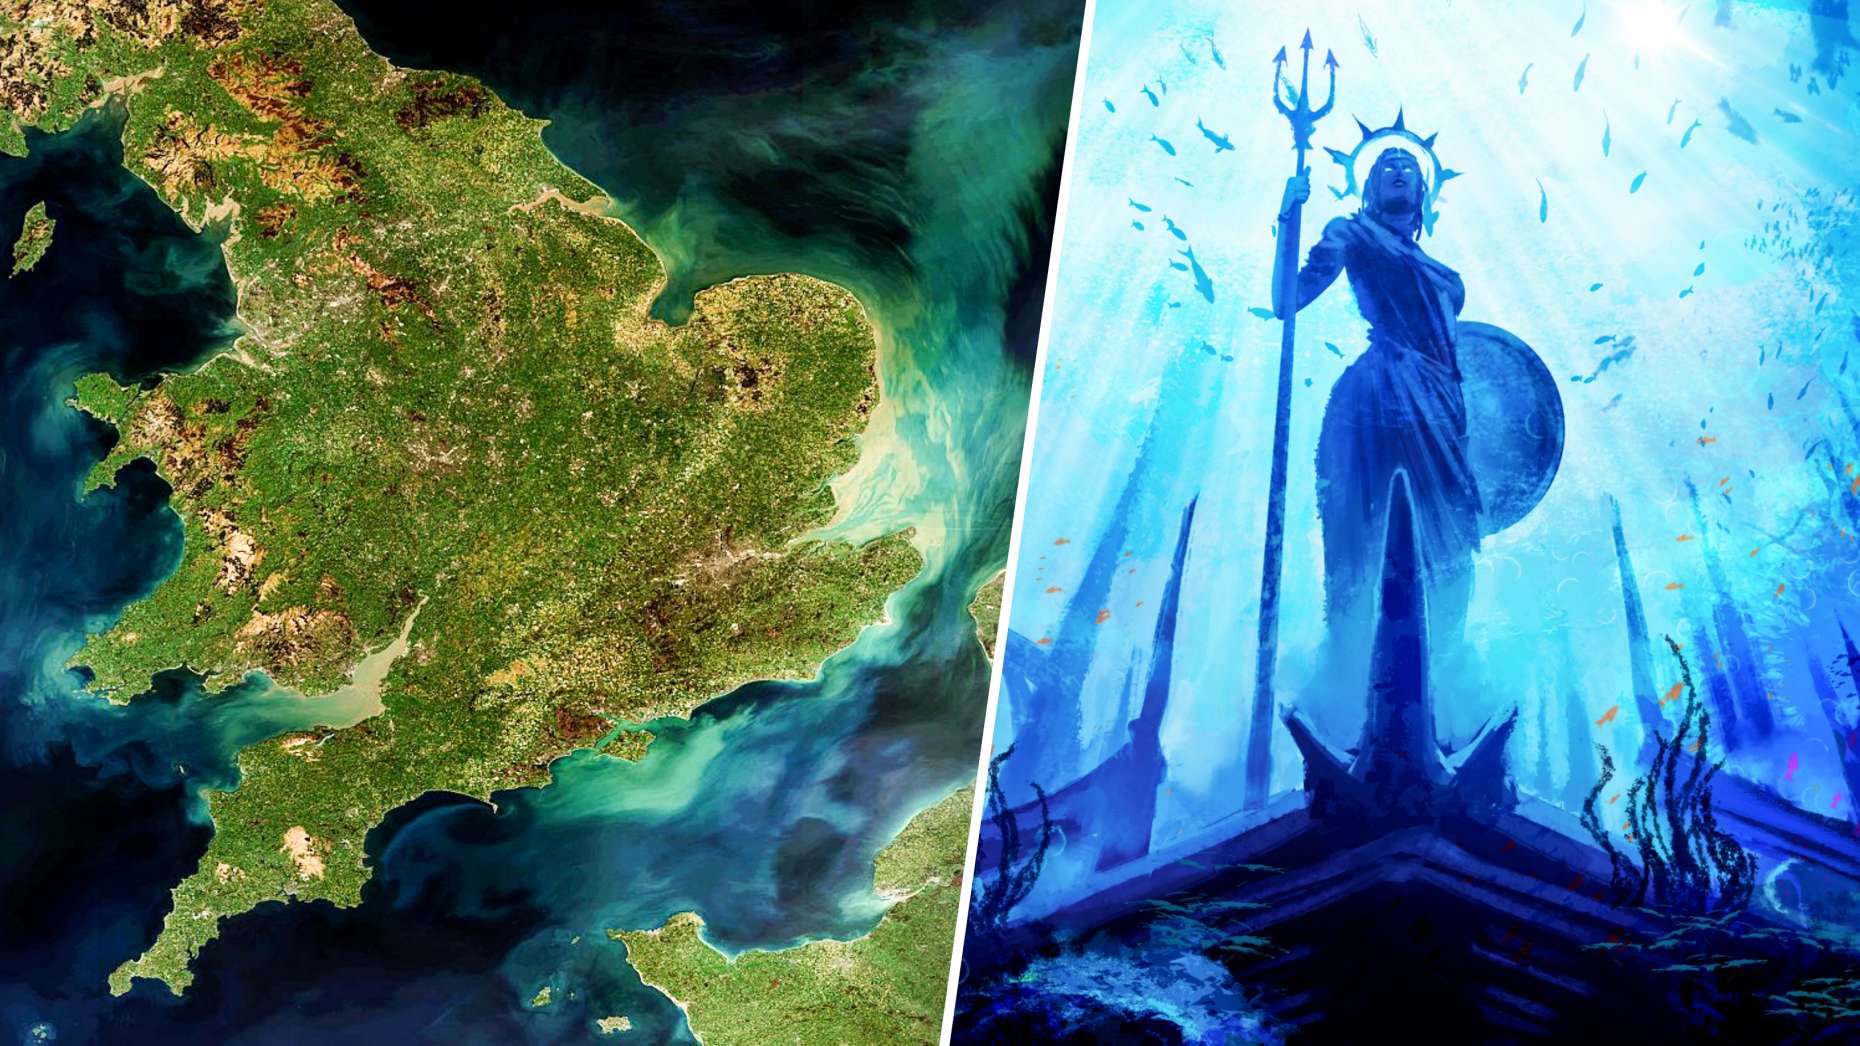 Prehistoric Doggerland: Siri za Atlantis ya Uingereza 2